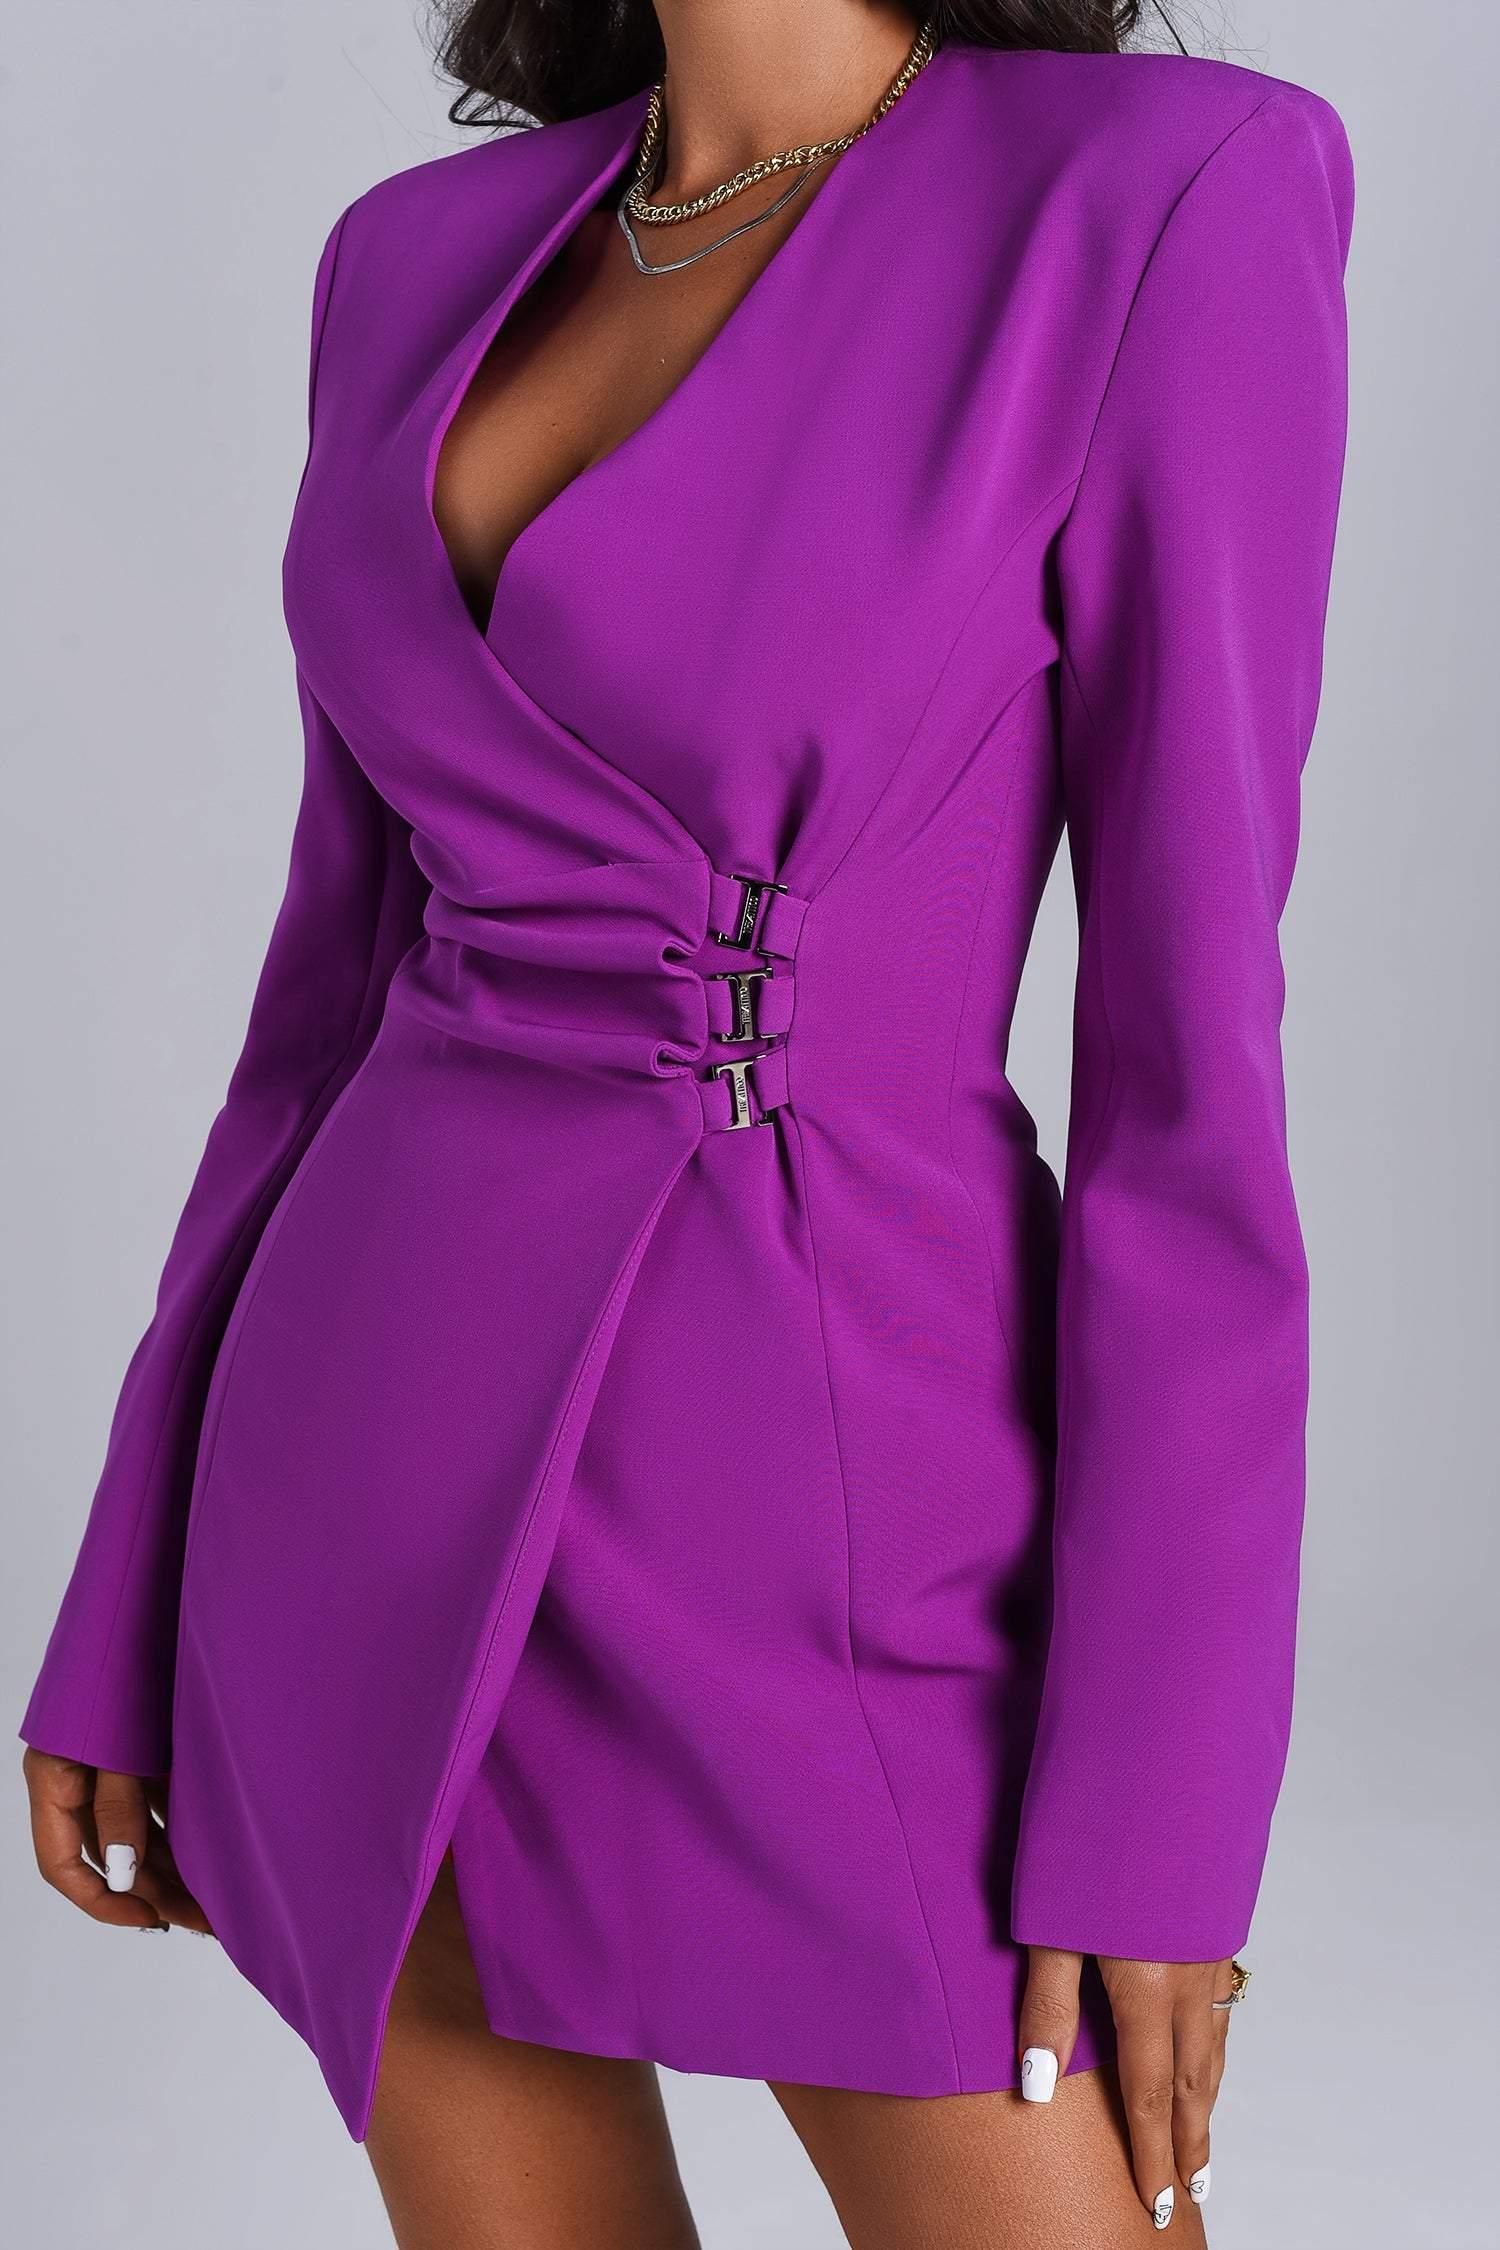 Kinsley Purple Blazer Dress - Bellabarnett